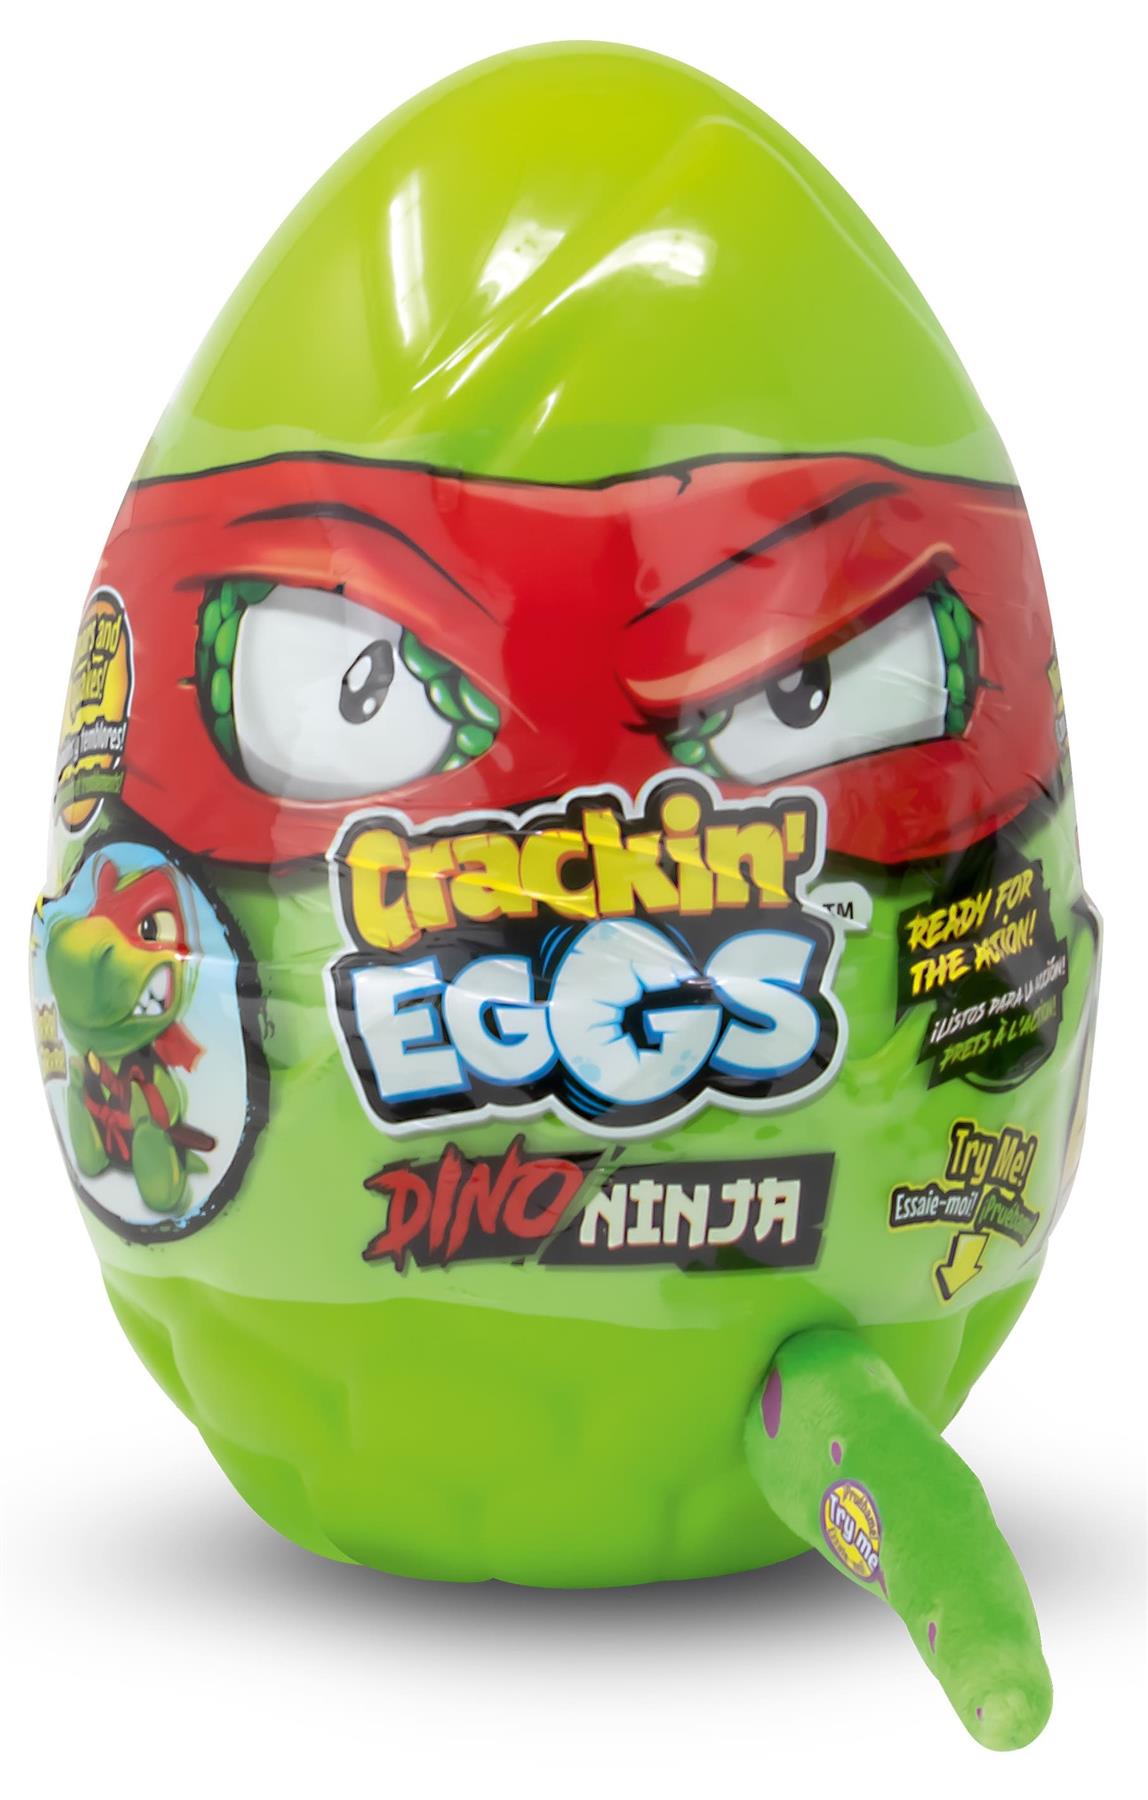 Crackin' Eggs - Dino Ninja Plush from Bargain Max